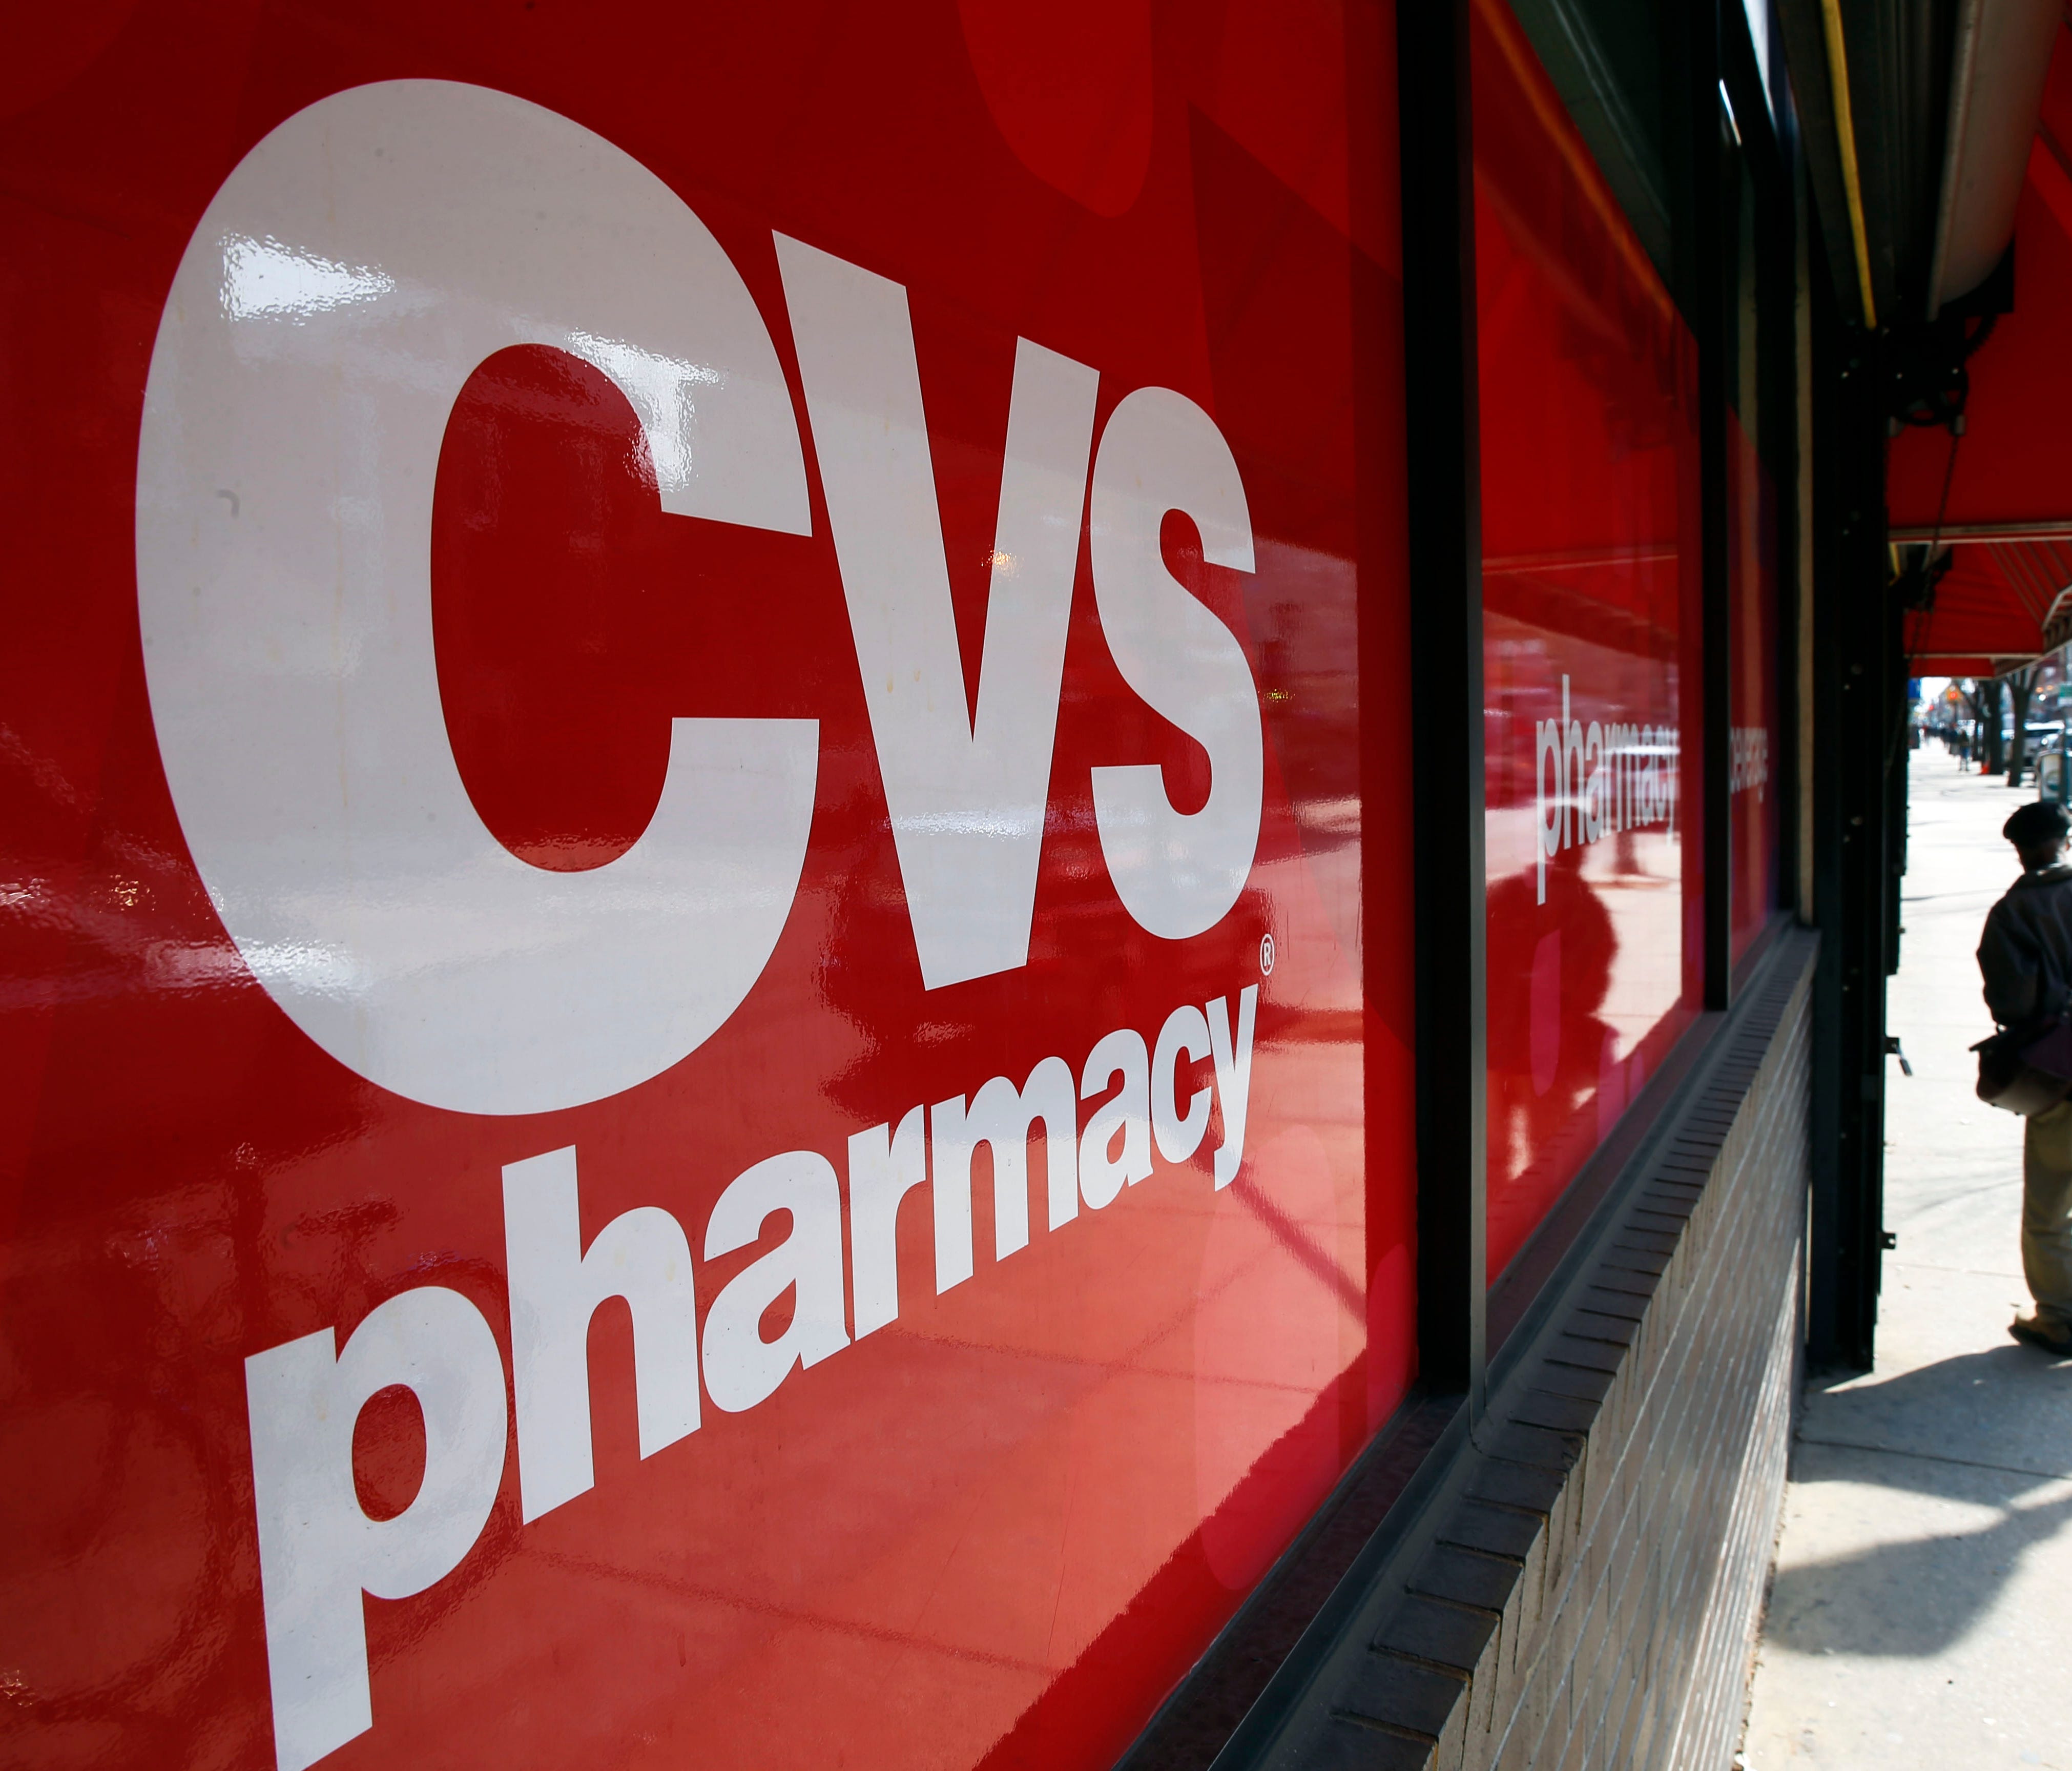 File photo taken in 2014 shows a CVS pharmacystore in Philadelphia.